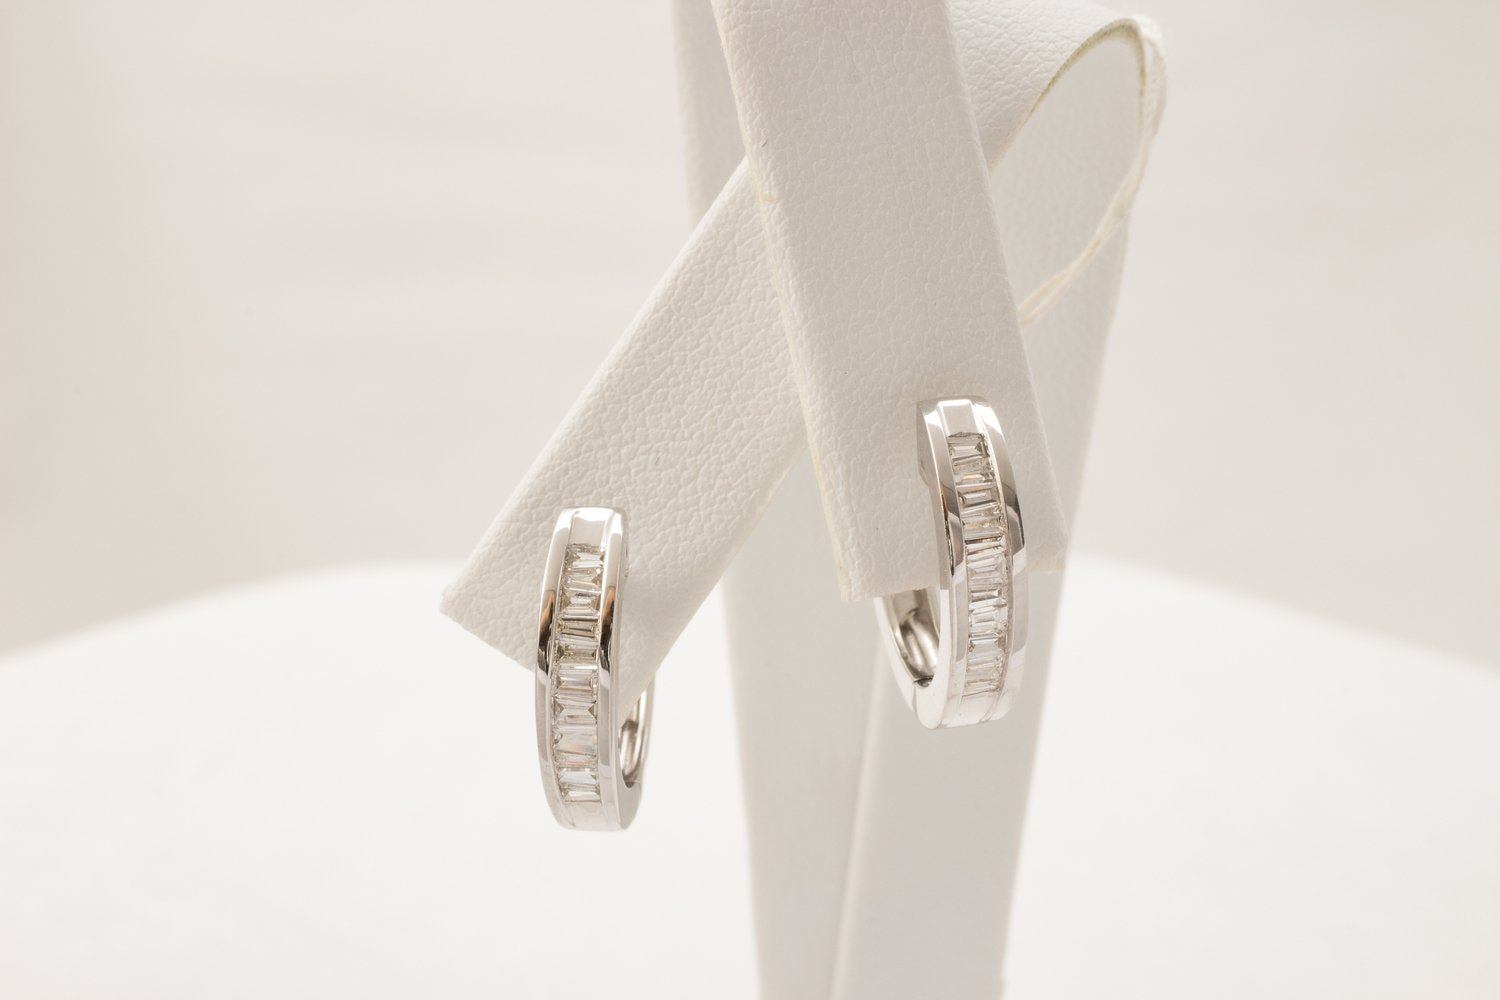 18 Karat White Gold Hoop Diamond Earrings.